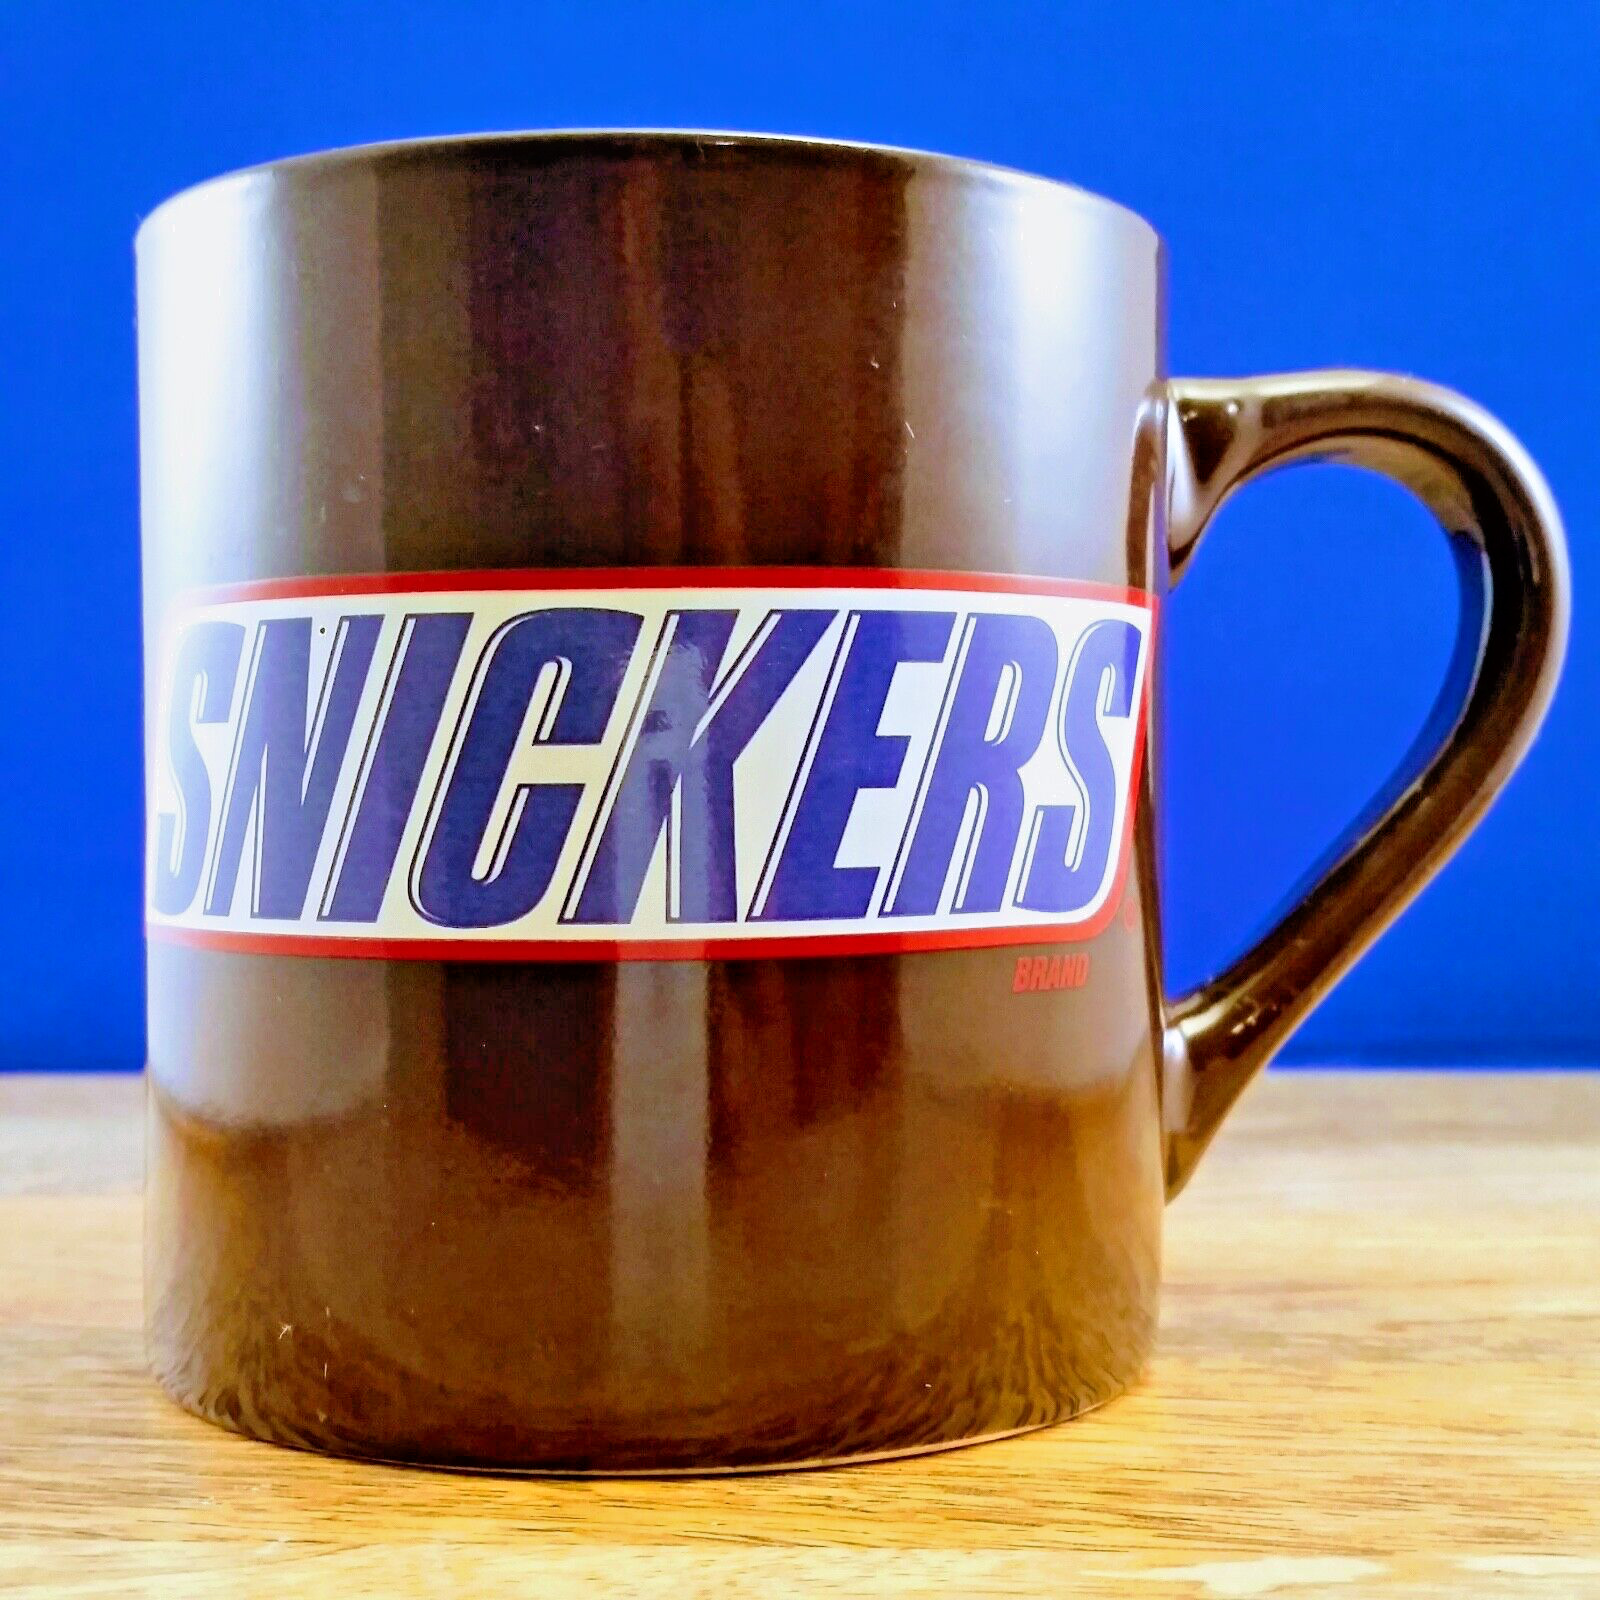 Snickers Candy Bar Coffee Mug Tea Cup 2016 Promotional Advertising Mars Jumbo